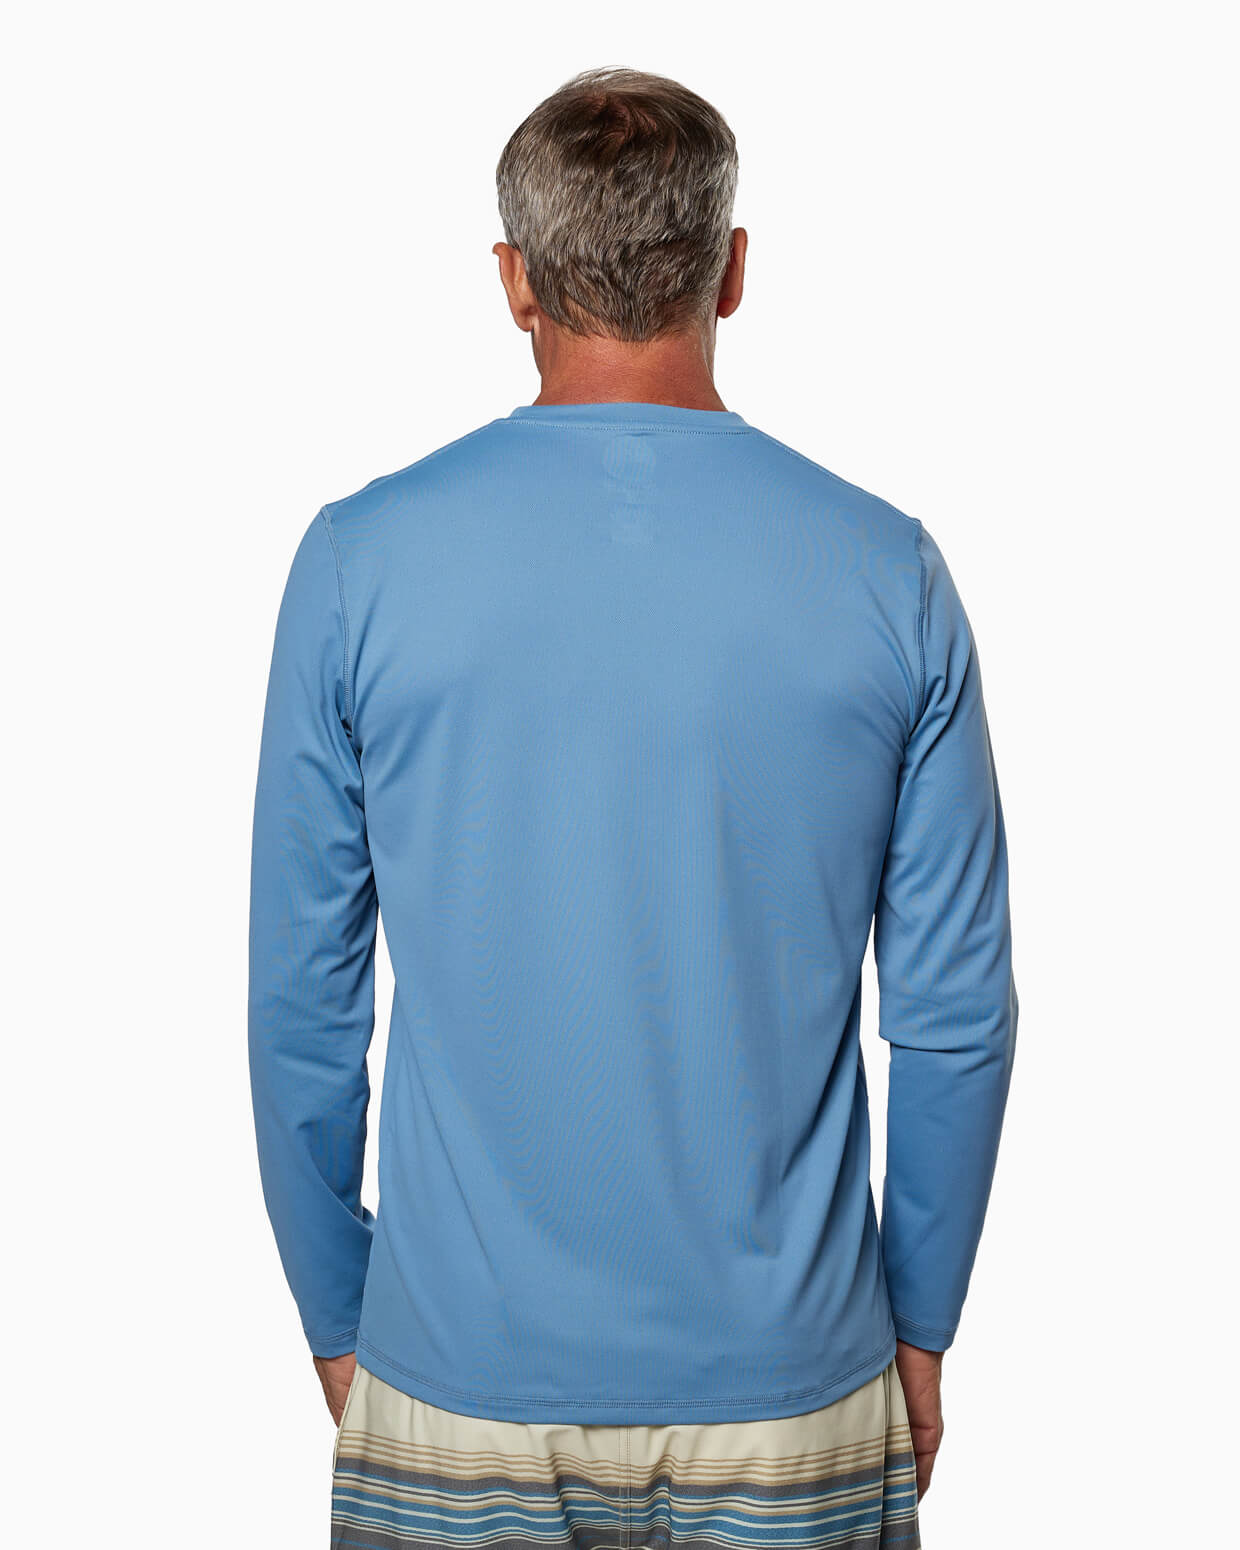 Protector Element Guard | UPF 50+ Long Sleeve UV Protective Shirt